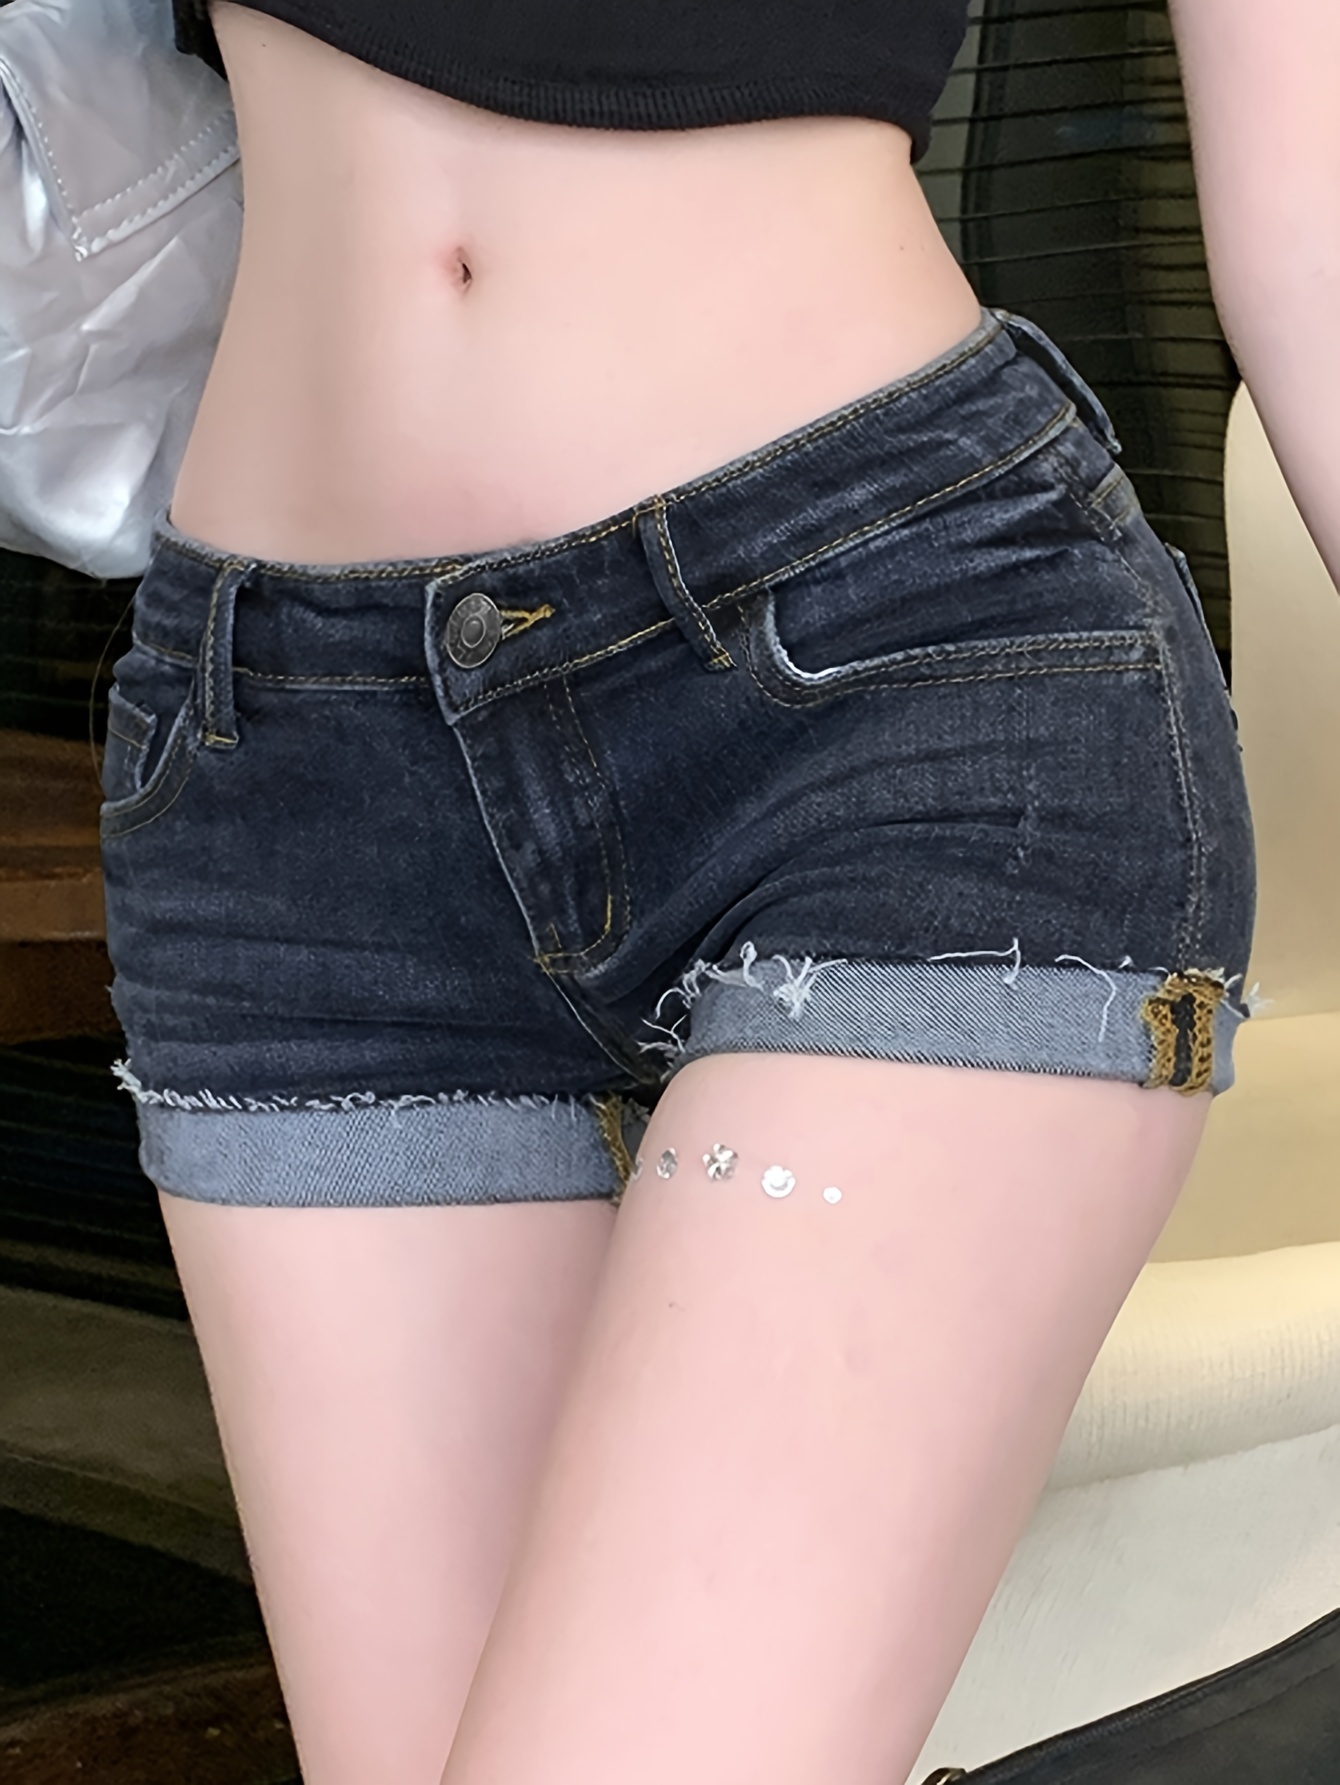 New fashion women's sexy mini hot pants jeans mini shorts jeans daisy duke  low w